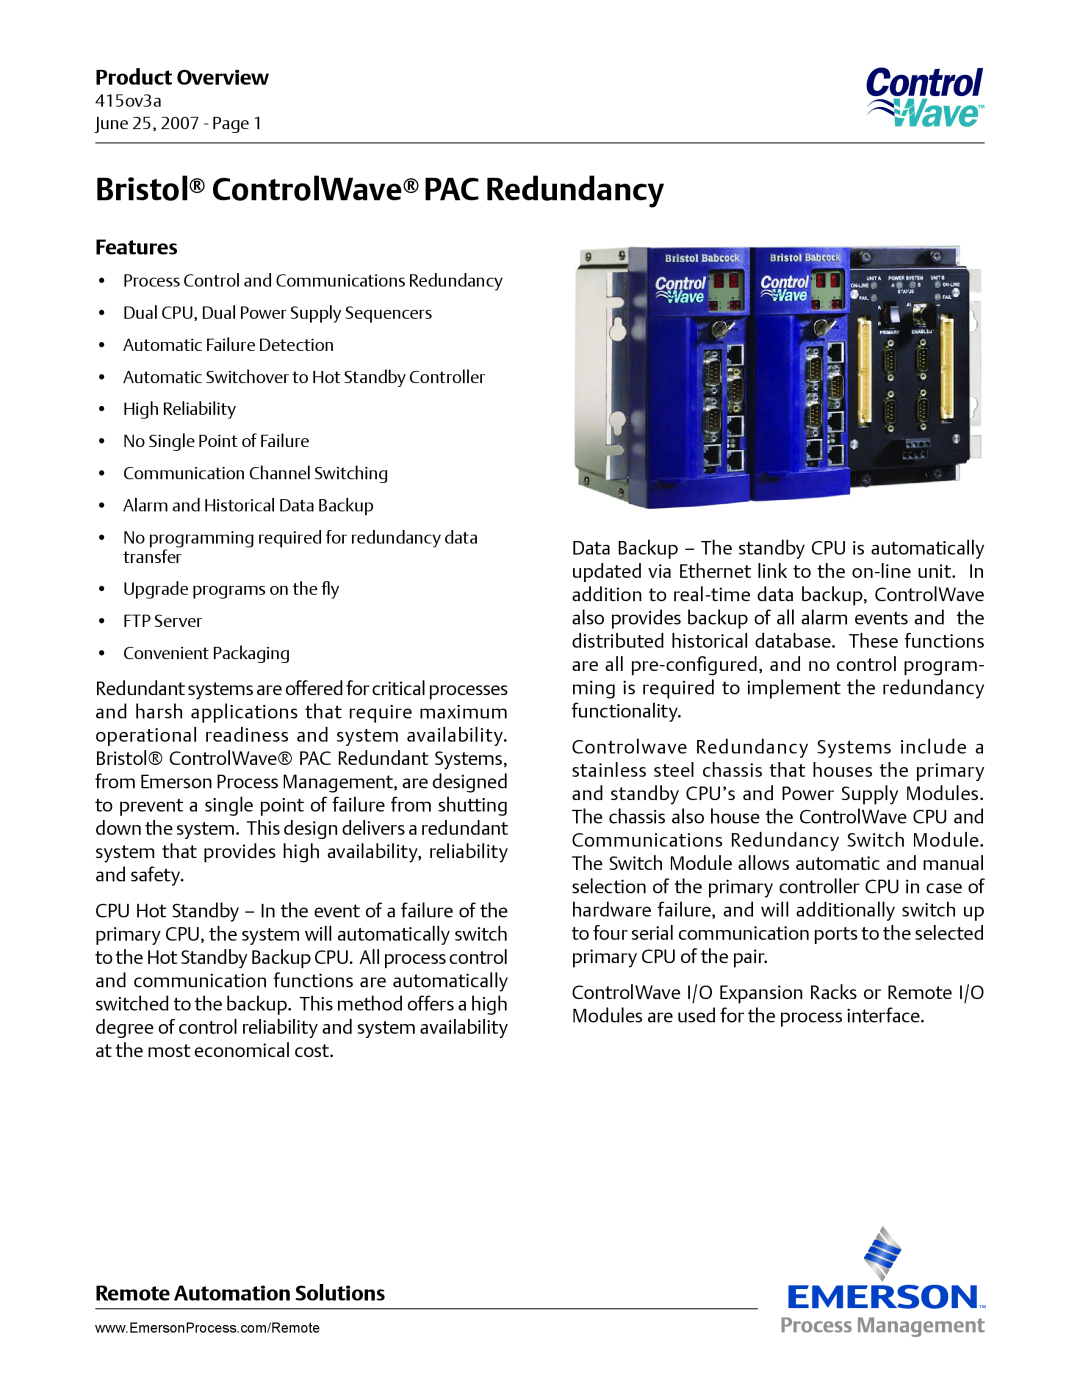 Emerson Process Management manual Bristol ControlWave PAC Redundancy, Product Overview, Features 